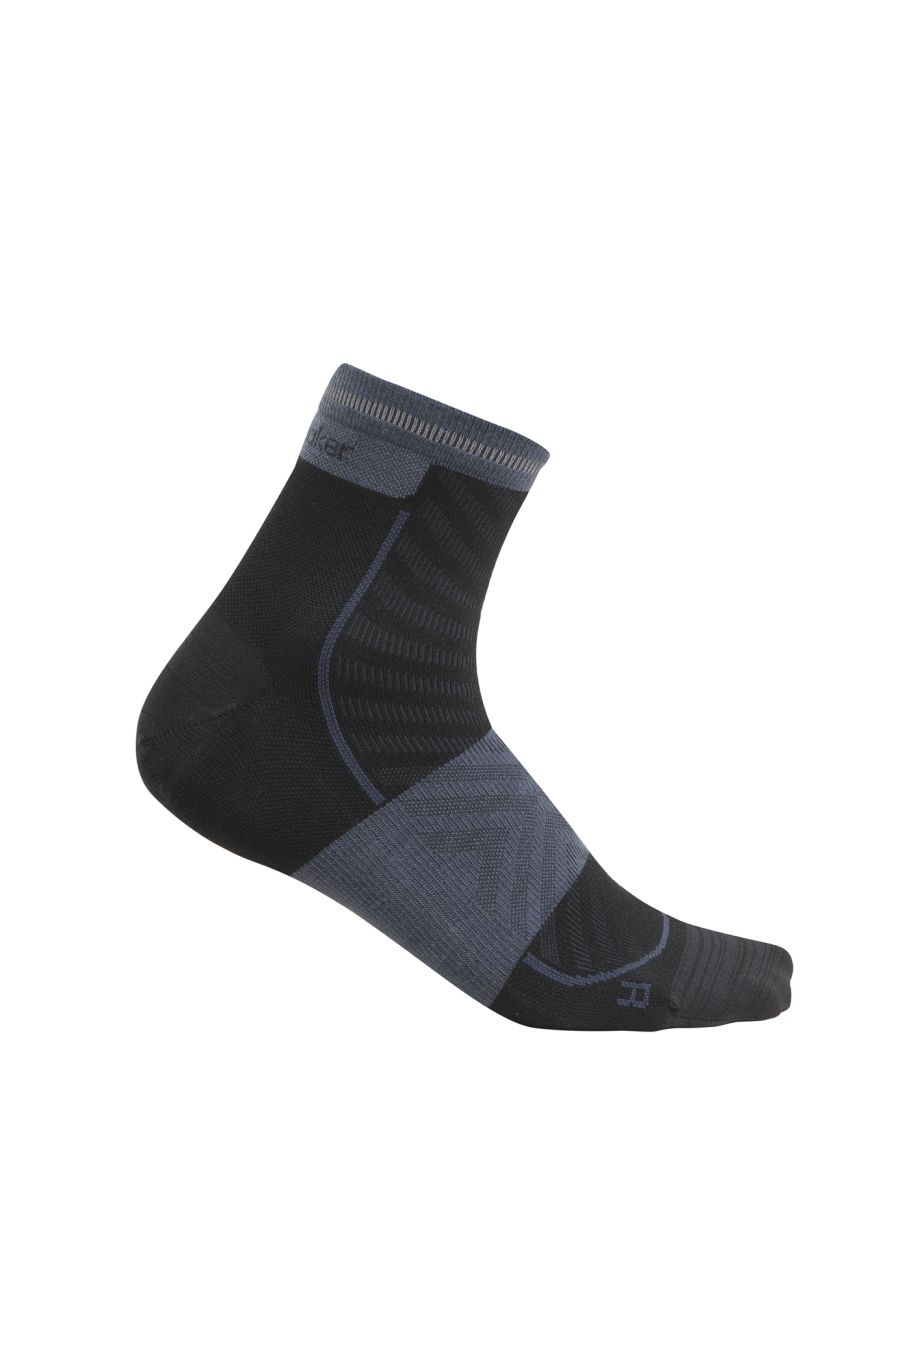 Pánské merino ponožky ICEBREAKER Mens Merino Run+ Ultralight Mini, Black/Graphite velikost: 44,5-46,5 (L)